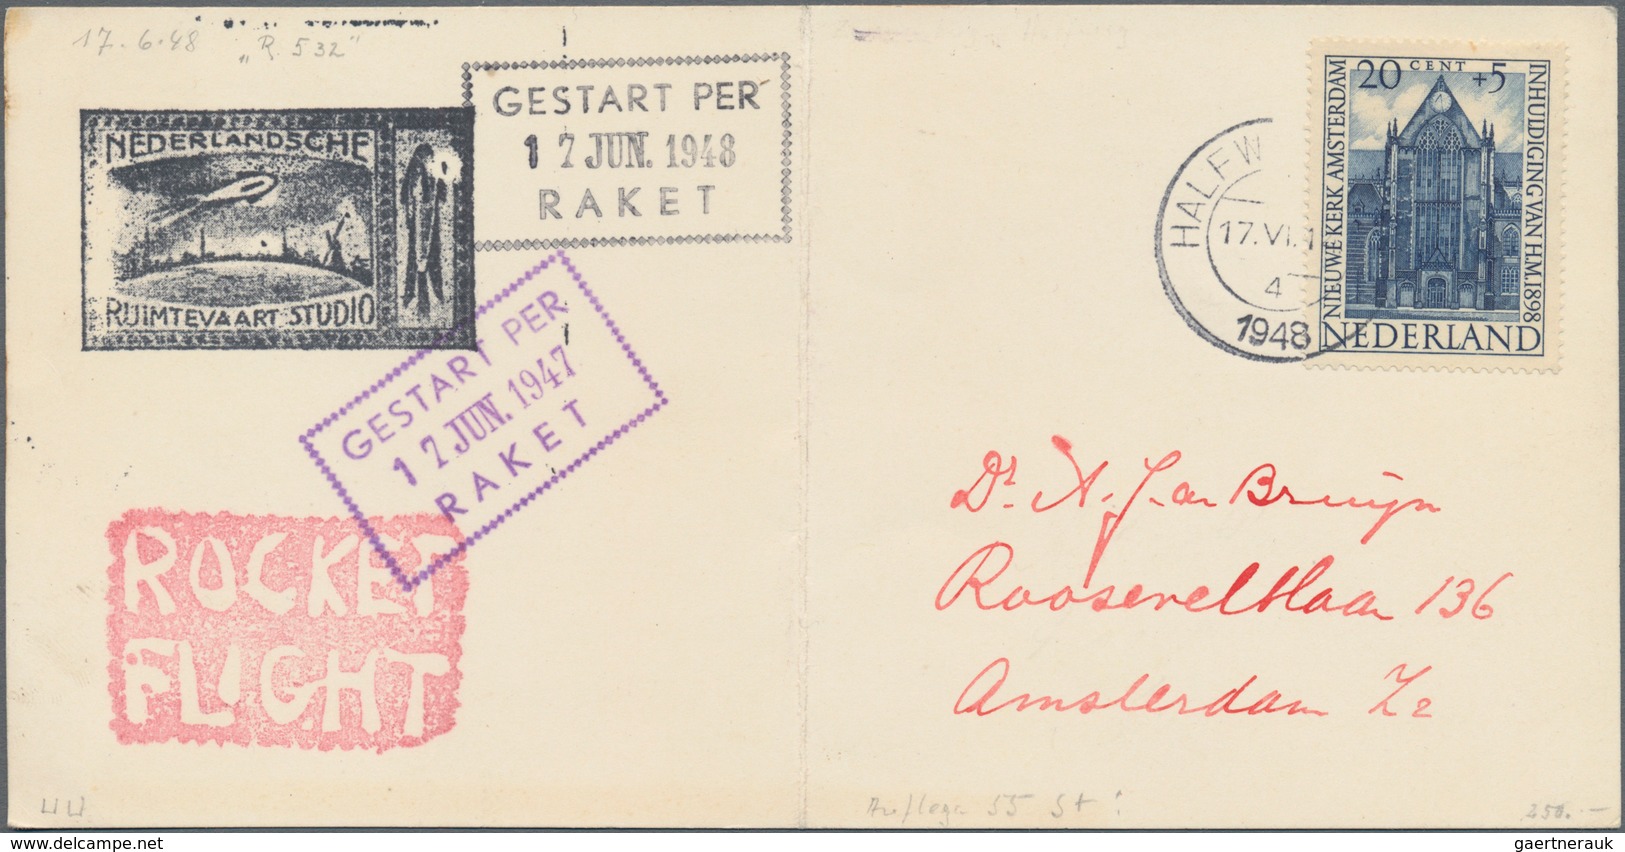 Raketenpost: 1934/1953 Netherlands: 28 covers and cards flown by various Dutch rockets, each describ